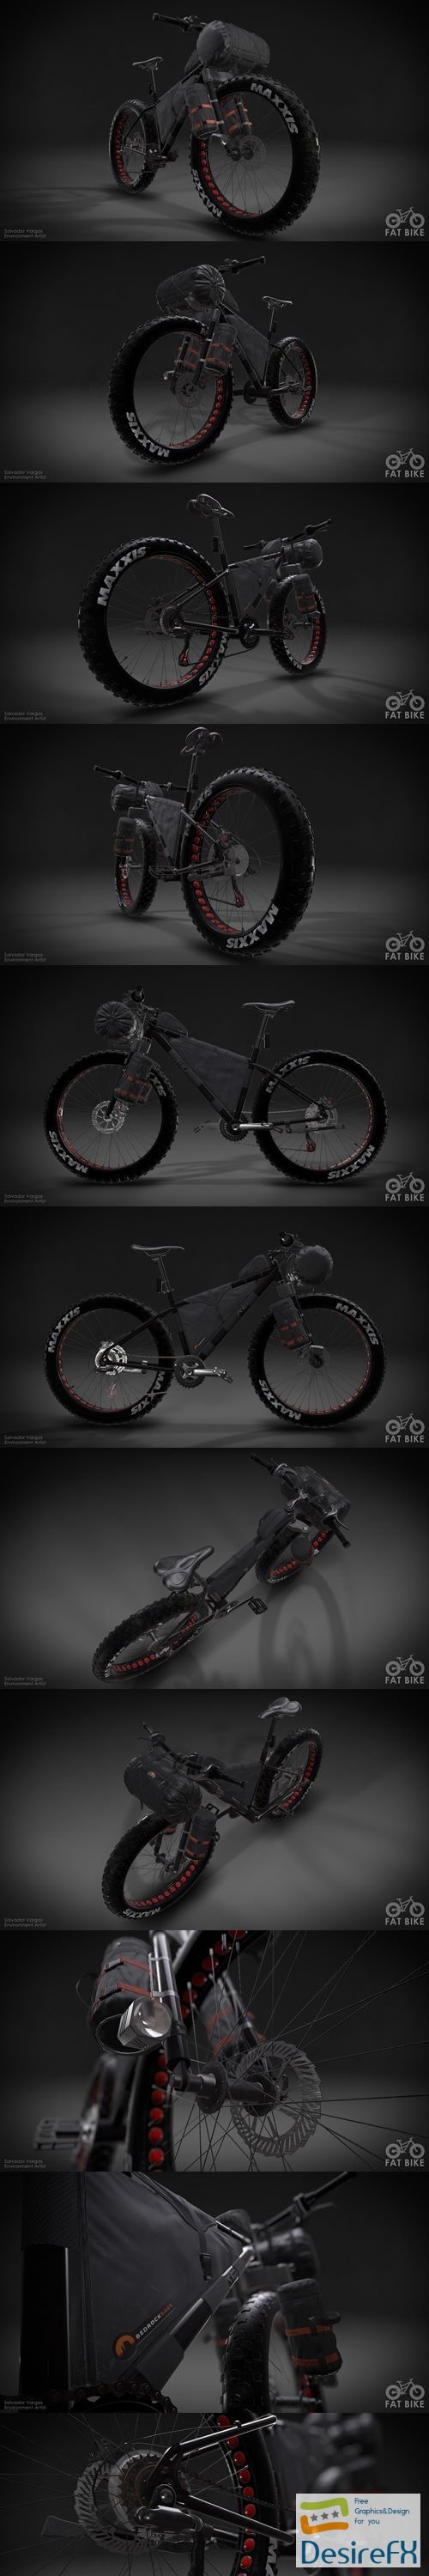 The Fat Bike 3D Model